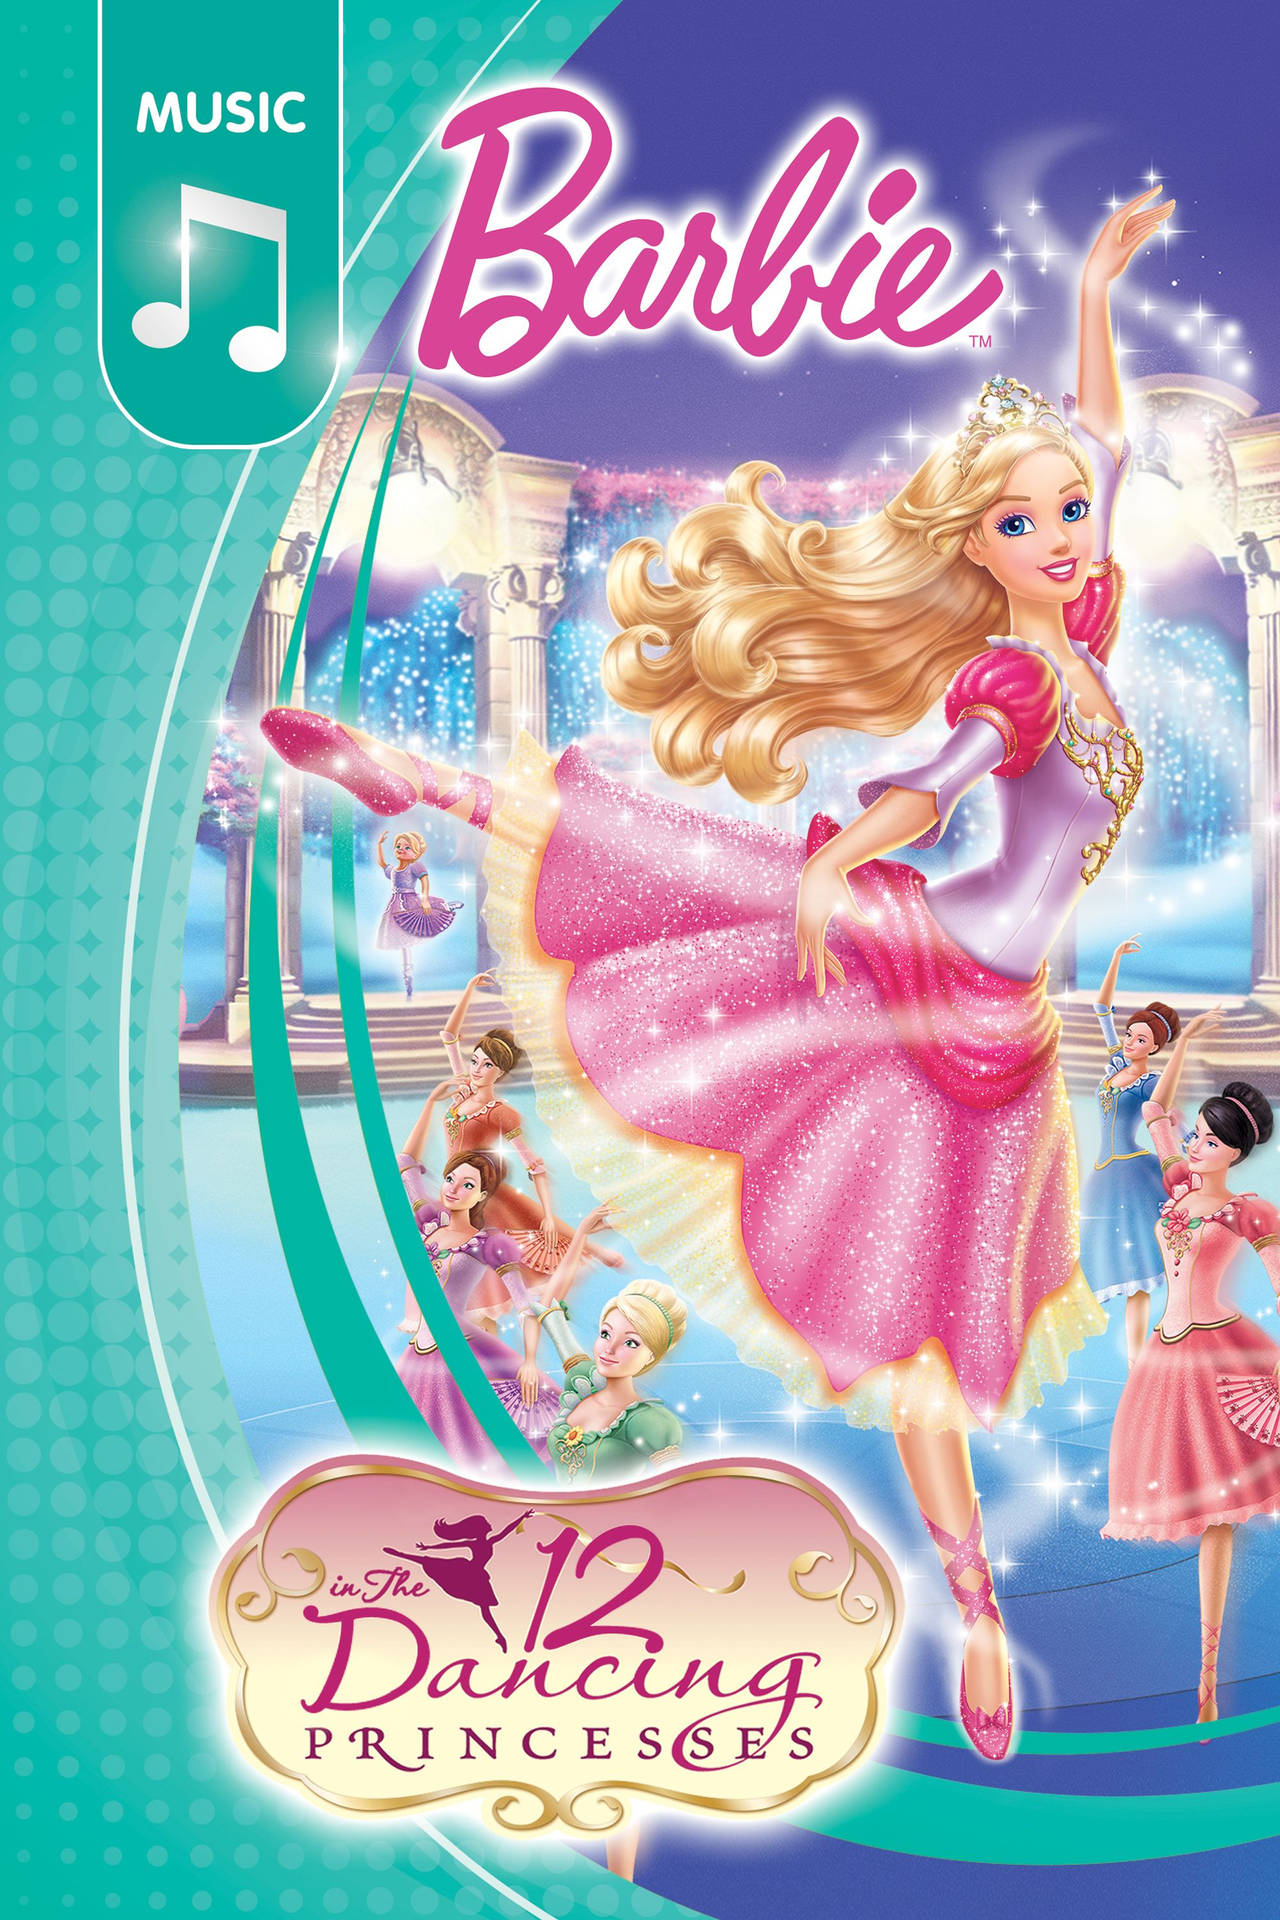 Barbie Principessa Principesse Danzanti Music Cover Sfondo